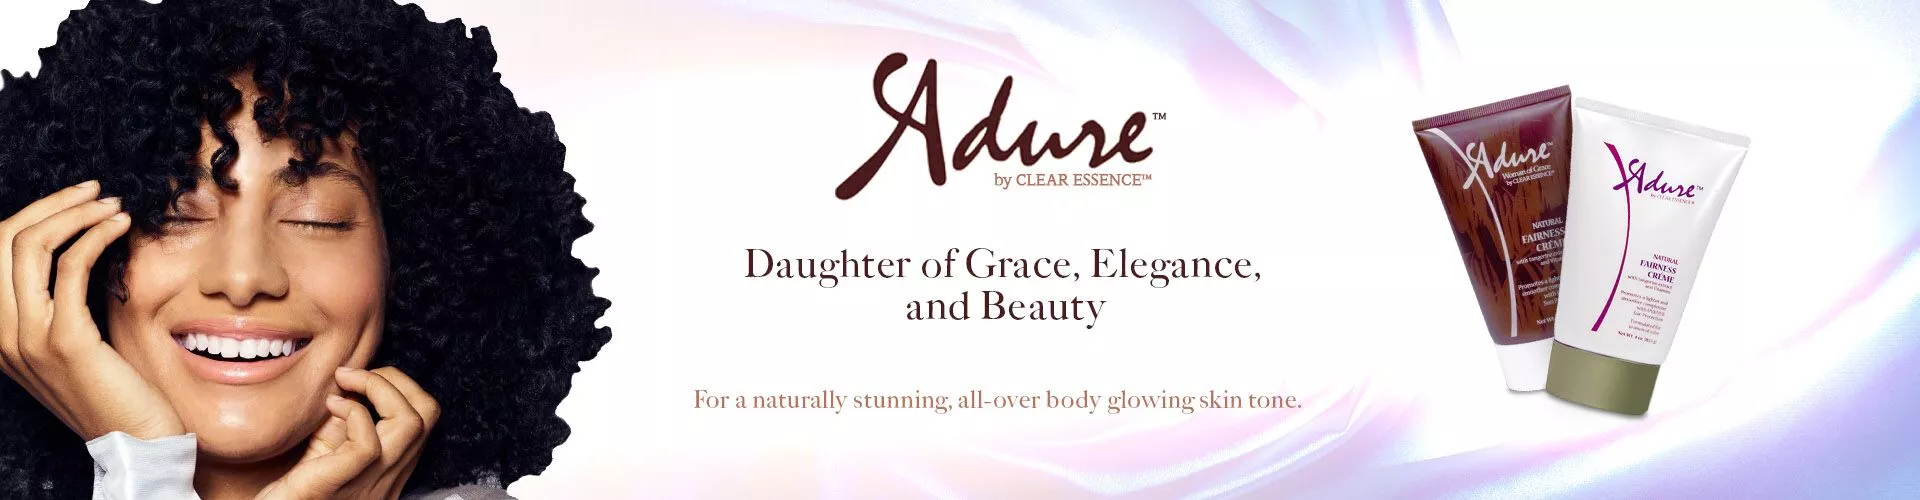 Adure Skin Care for Women